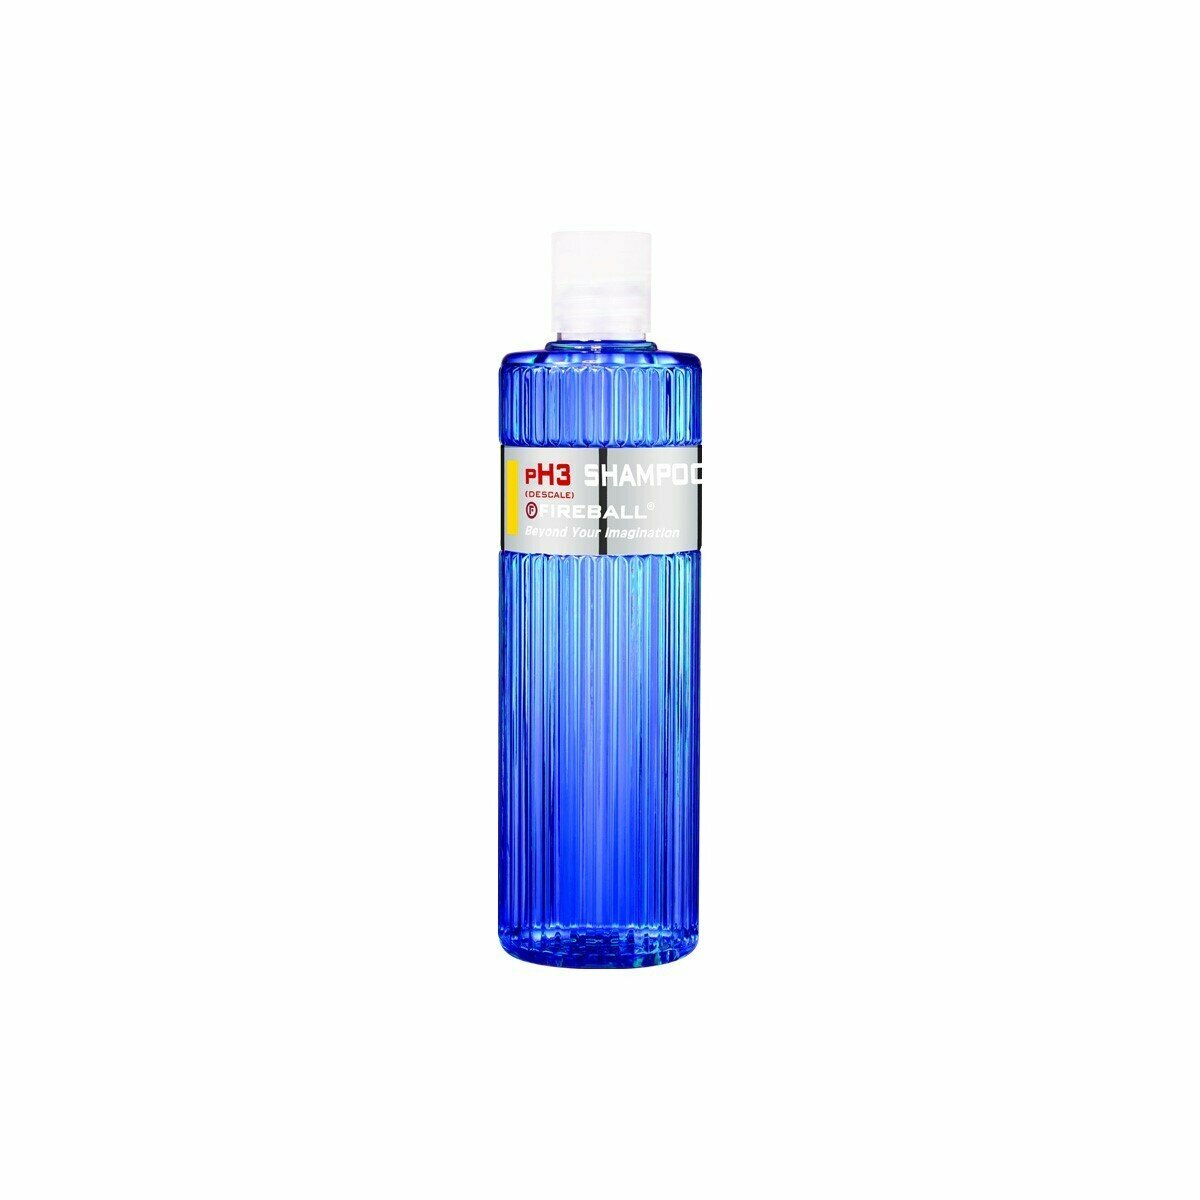 FIREBALL Кислотный шампунь Ph3 Shampoo 1:1000 500 мл